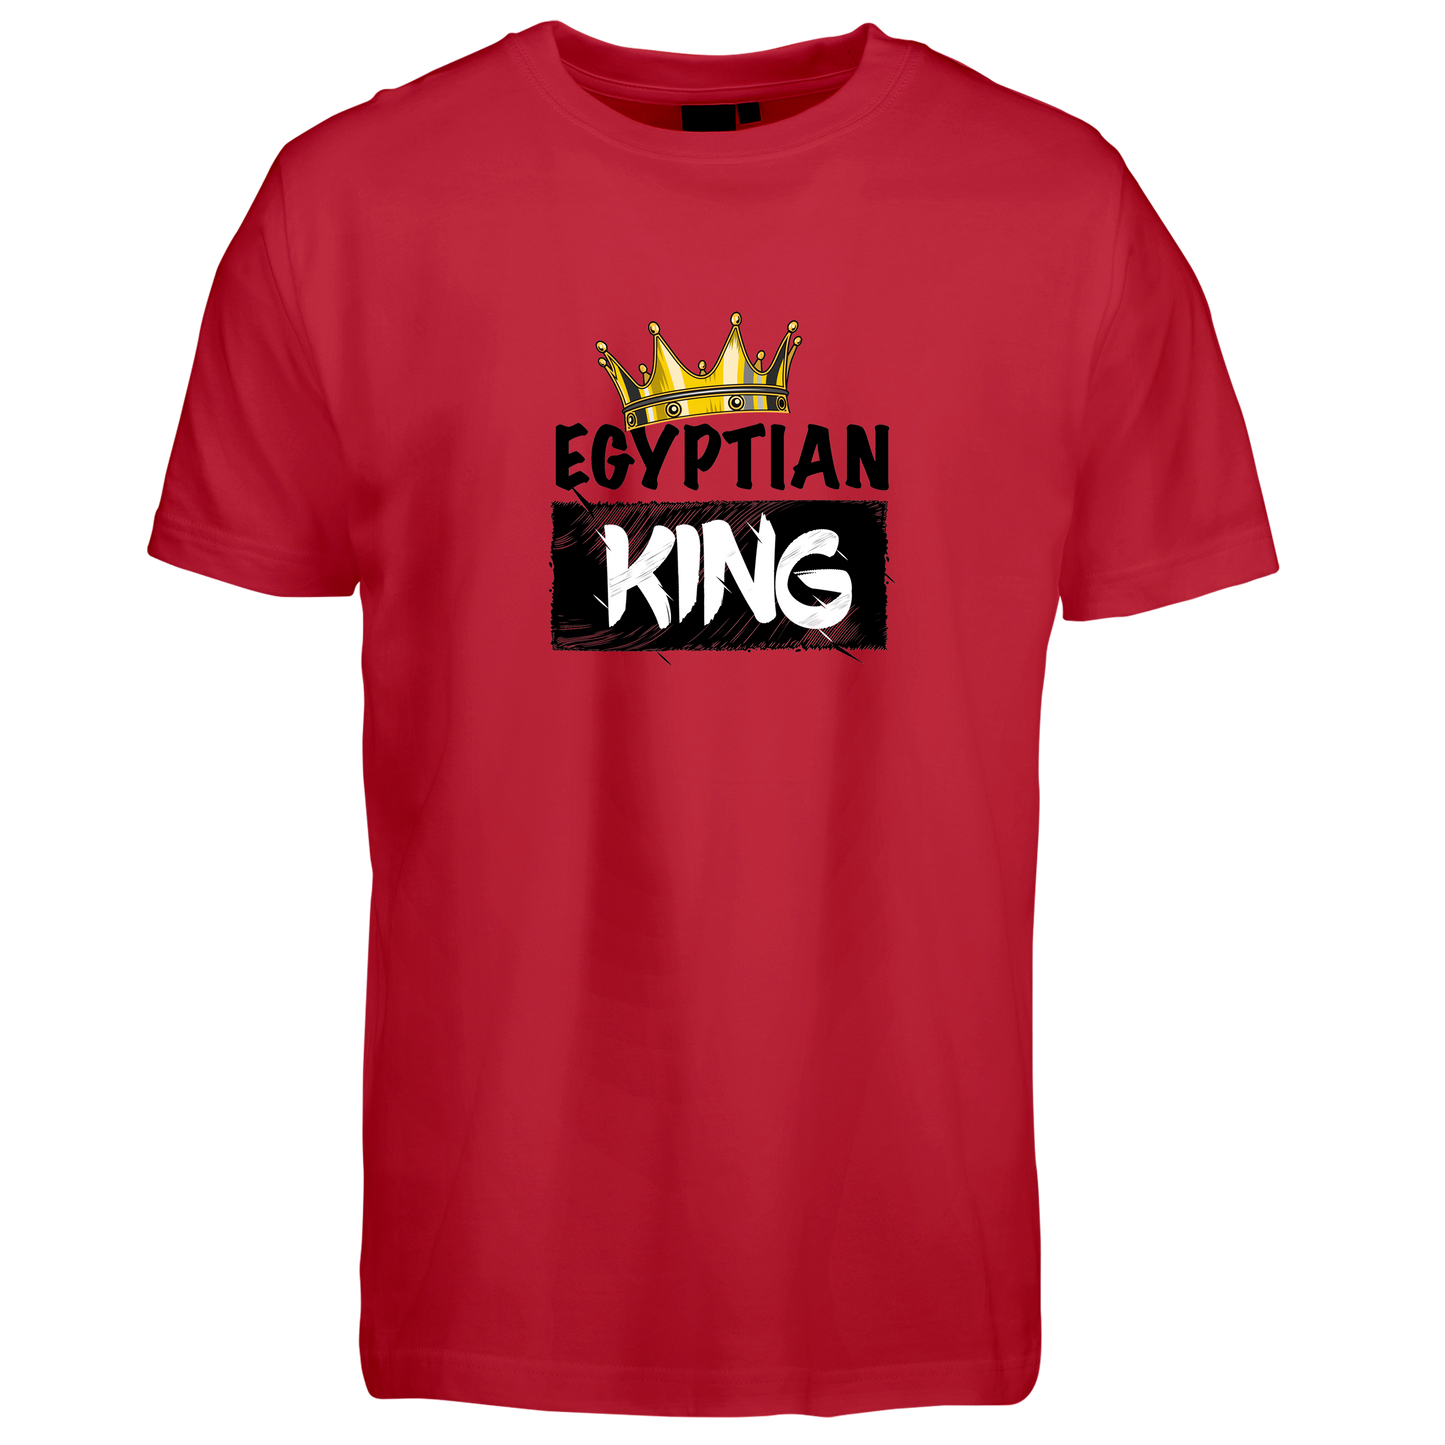 Egyptian king - t-shirt